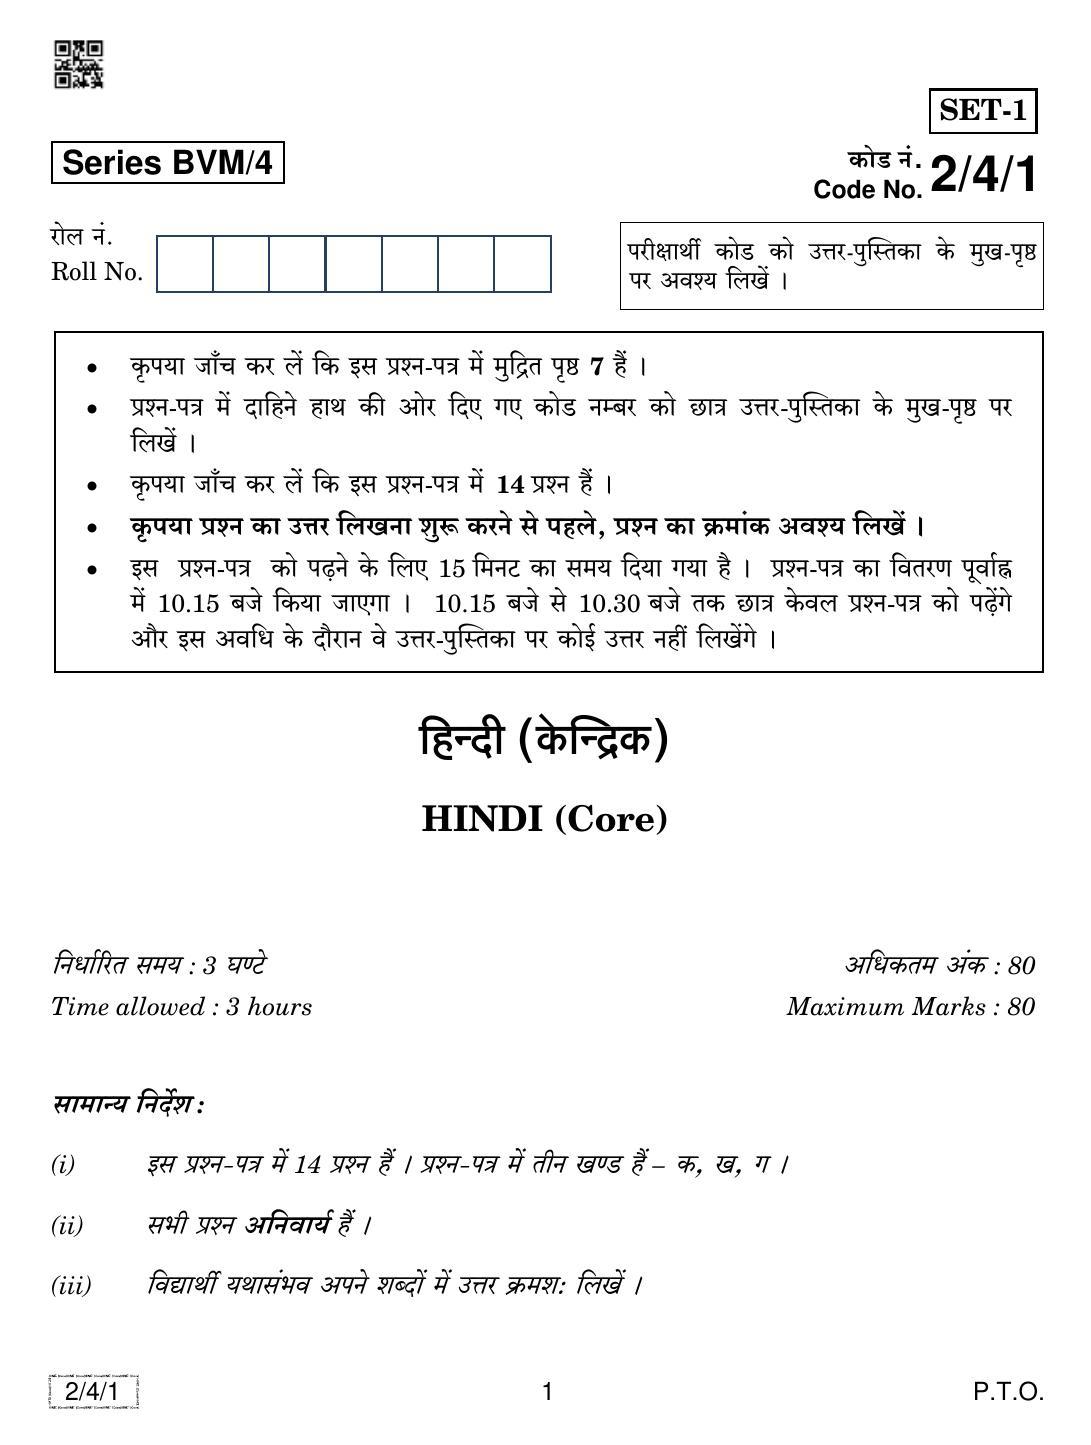 CBSE Class 12 2-4-1 Hindi Core 2019 Question Paper - Page 1